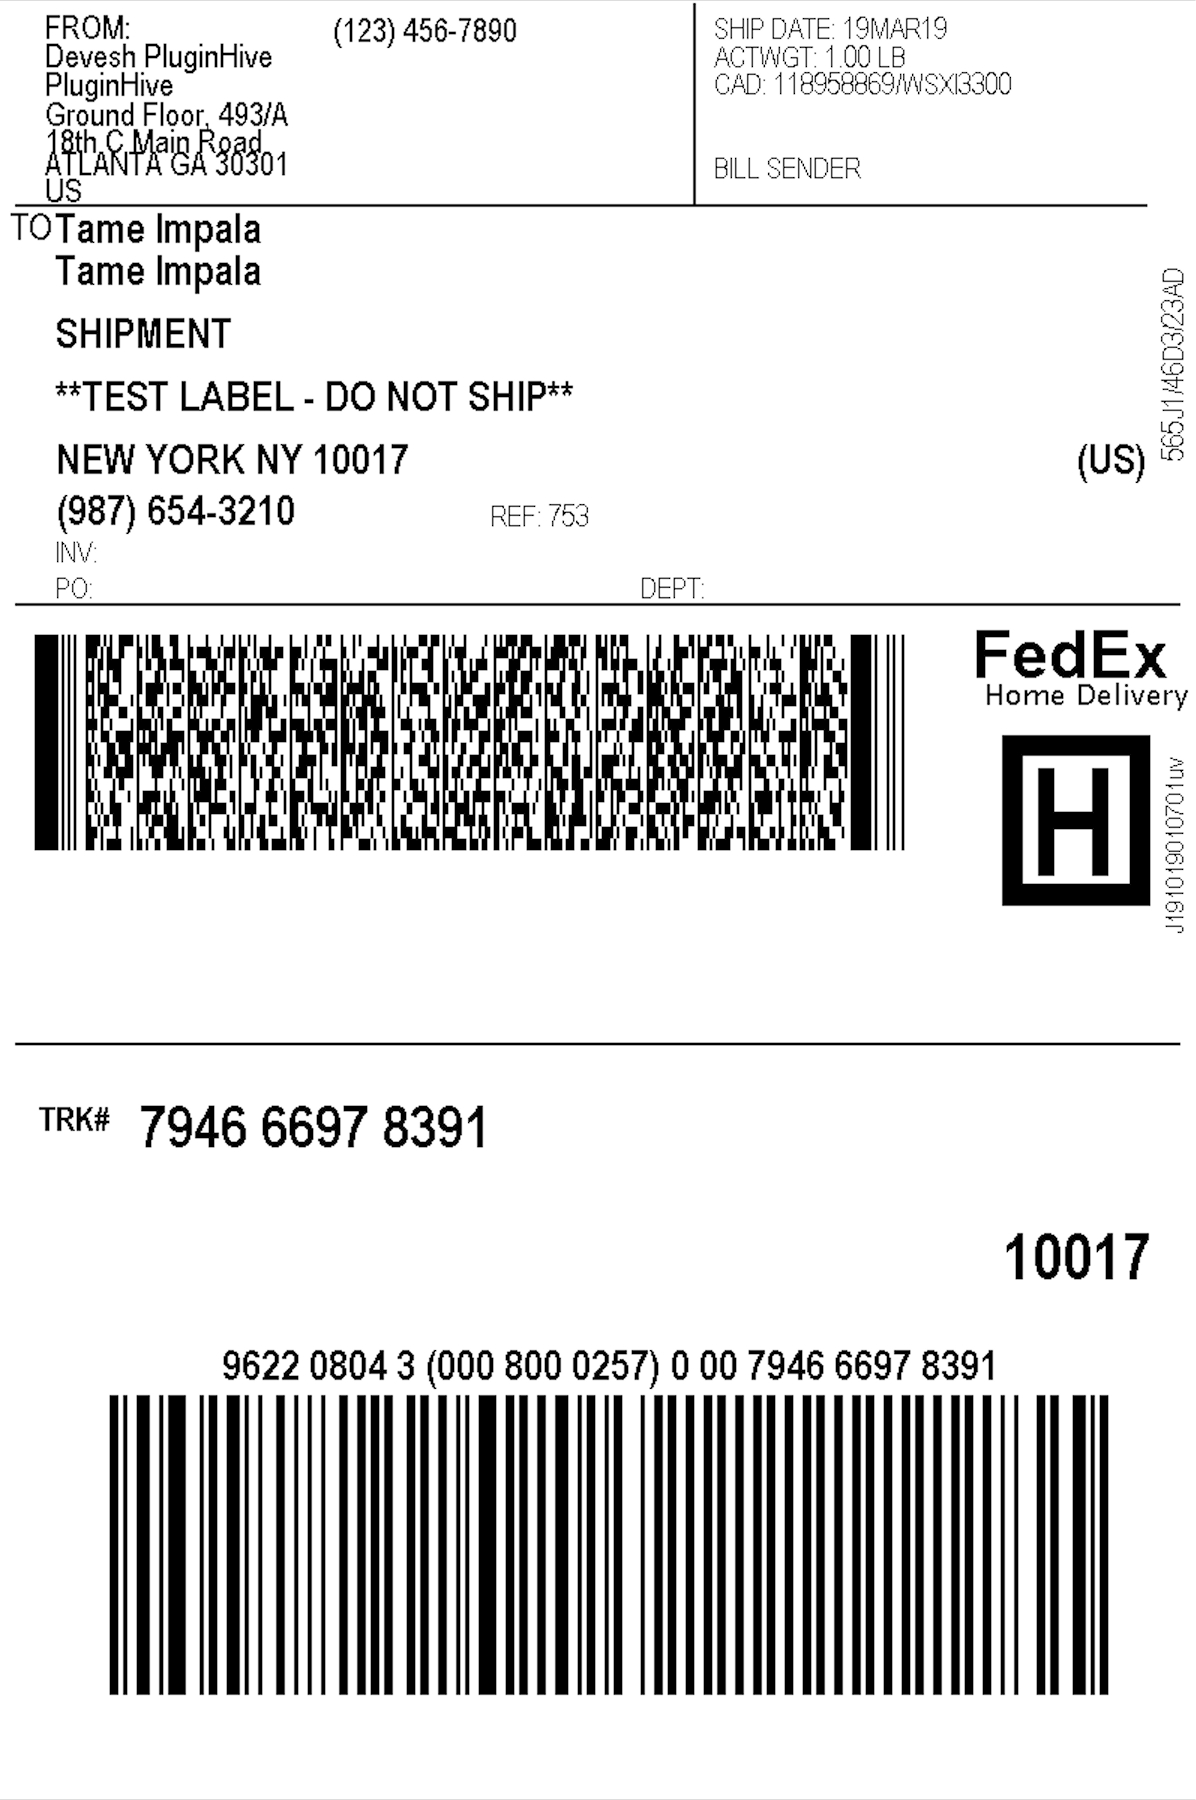 Fedex Ground Return Label Inside Fedex Label Template Word